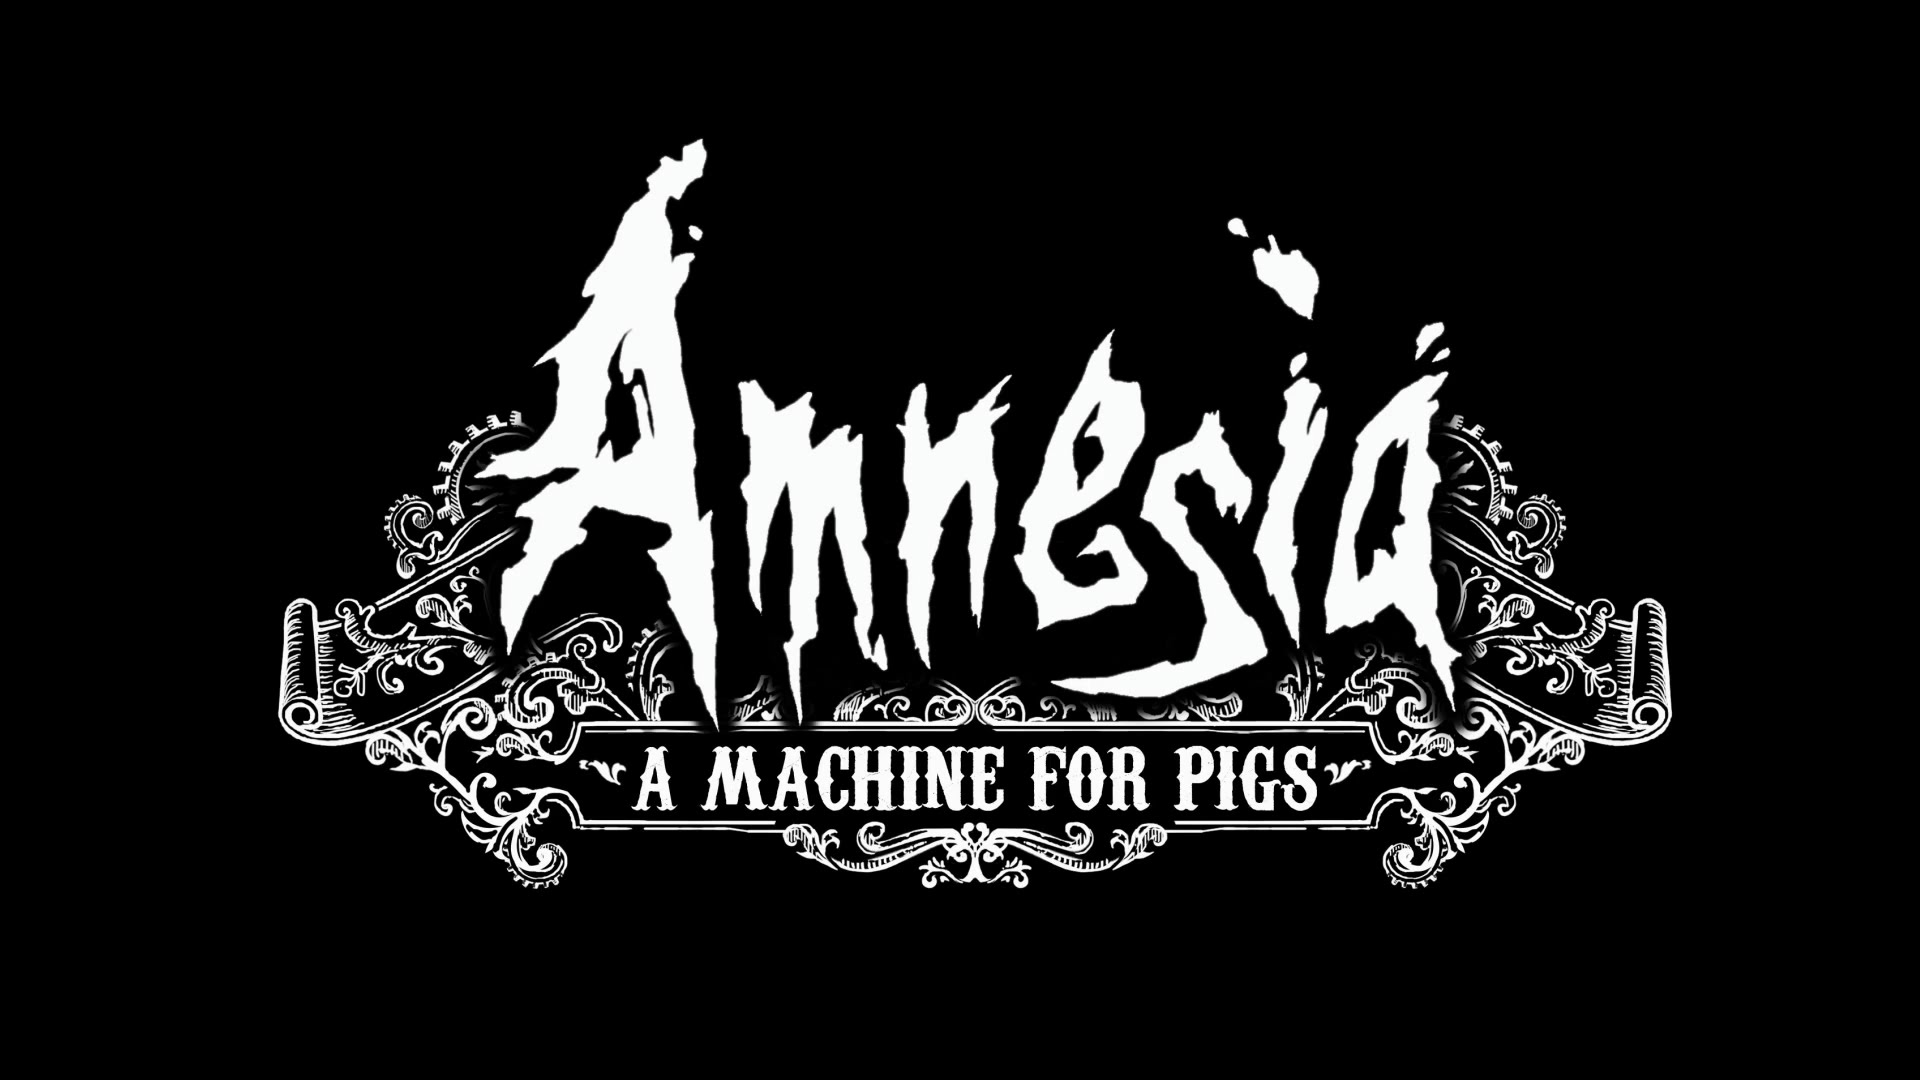 Alimentant els forns. Amnesia: A machine for pigs #7 de Arandur